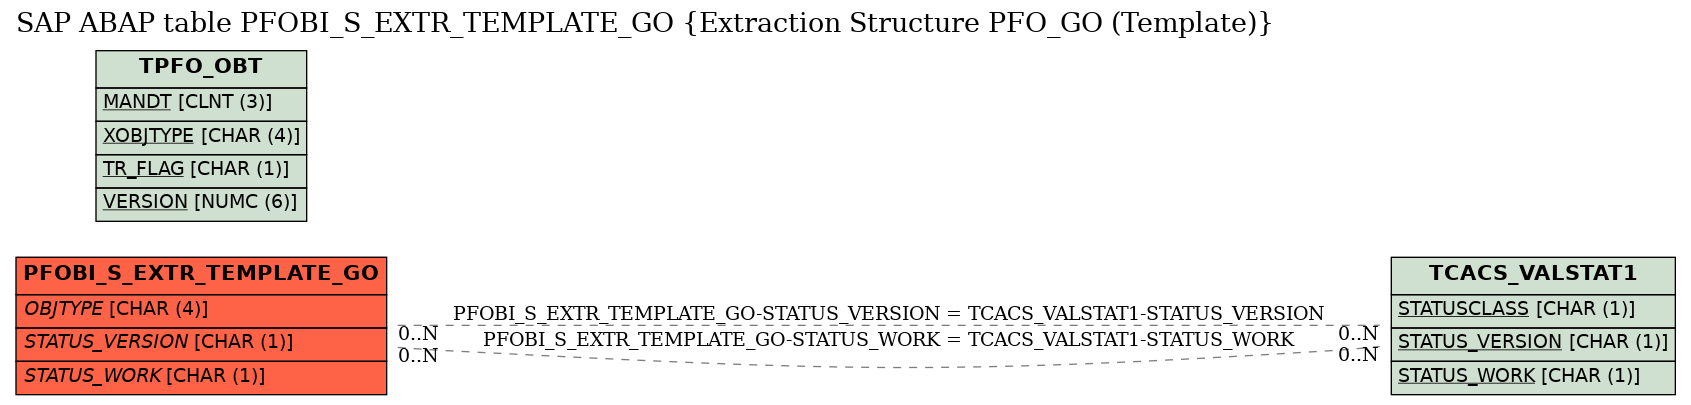 E-R Diagram for table PFOBI_S_EXTR_TEMPLATE_GO (Extraction Structure PFO_GO (Template))